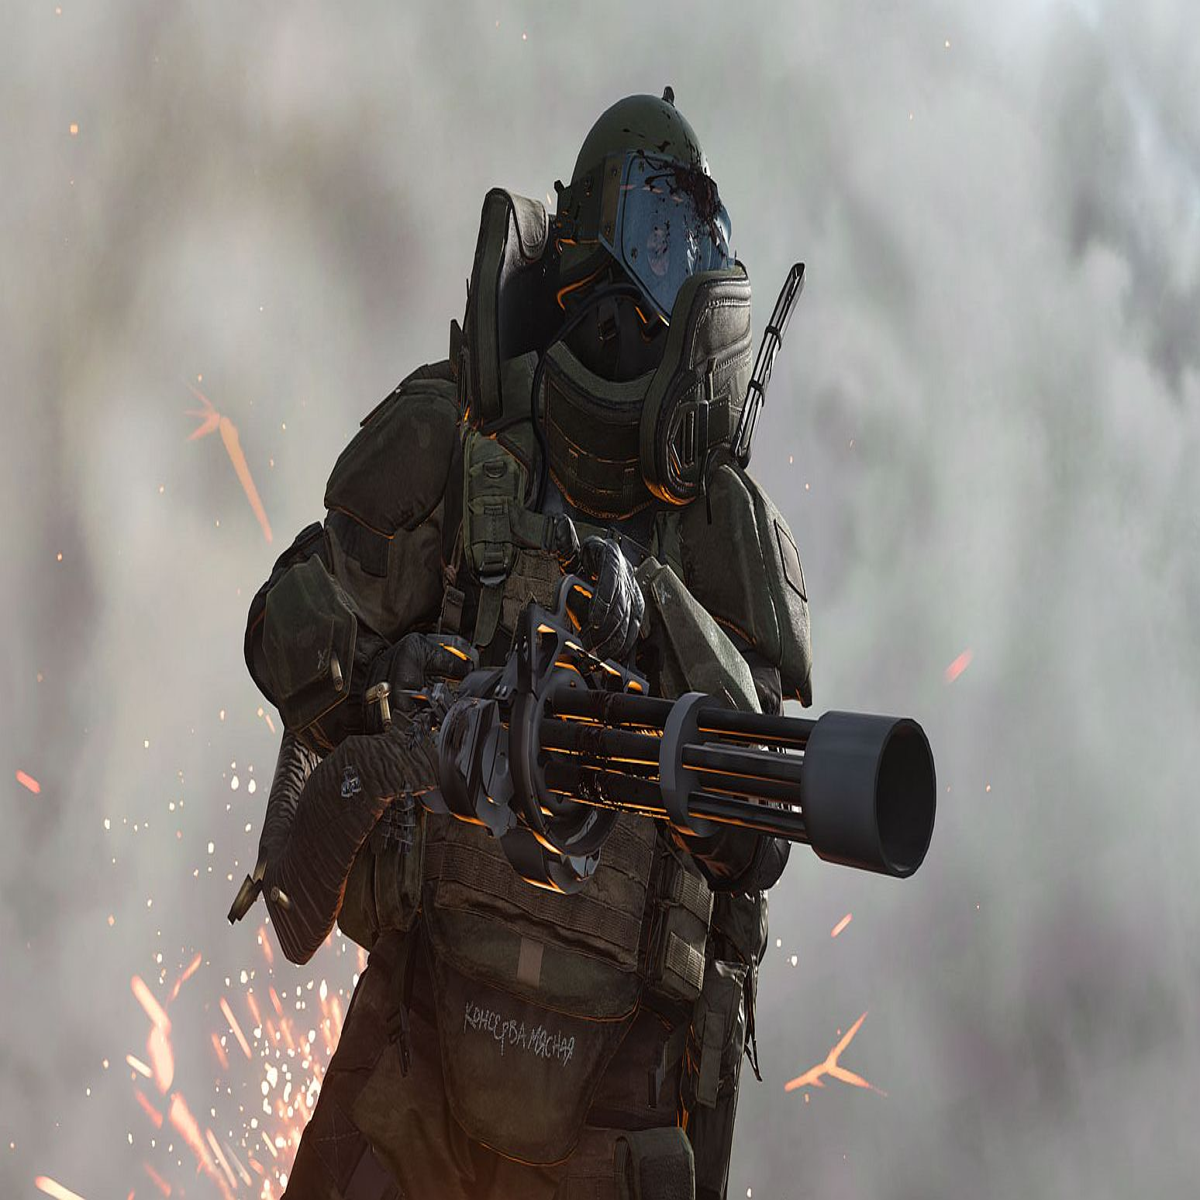 Call of Duty: Infinite Warfare trailer reveals class-based